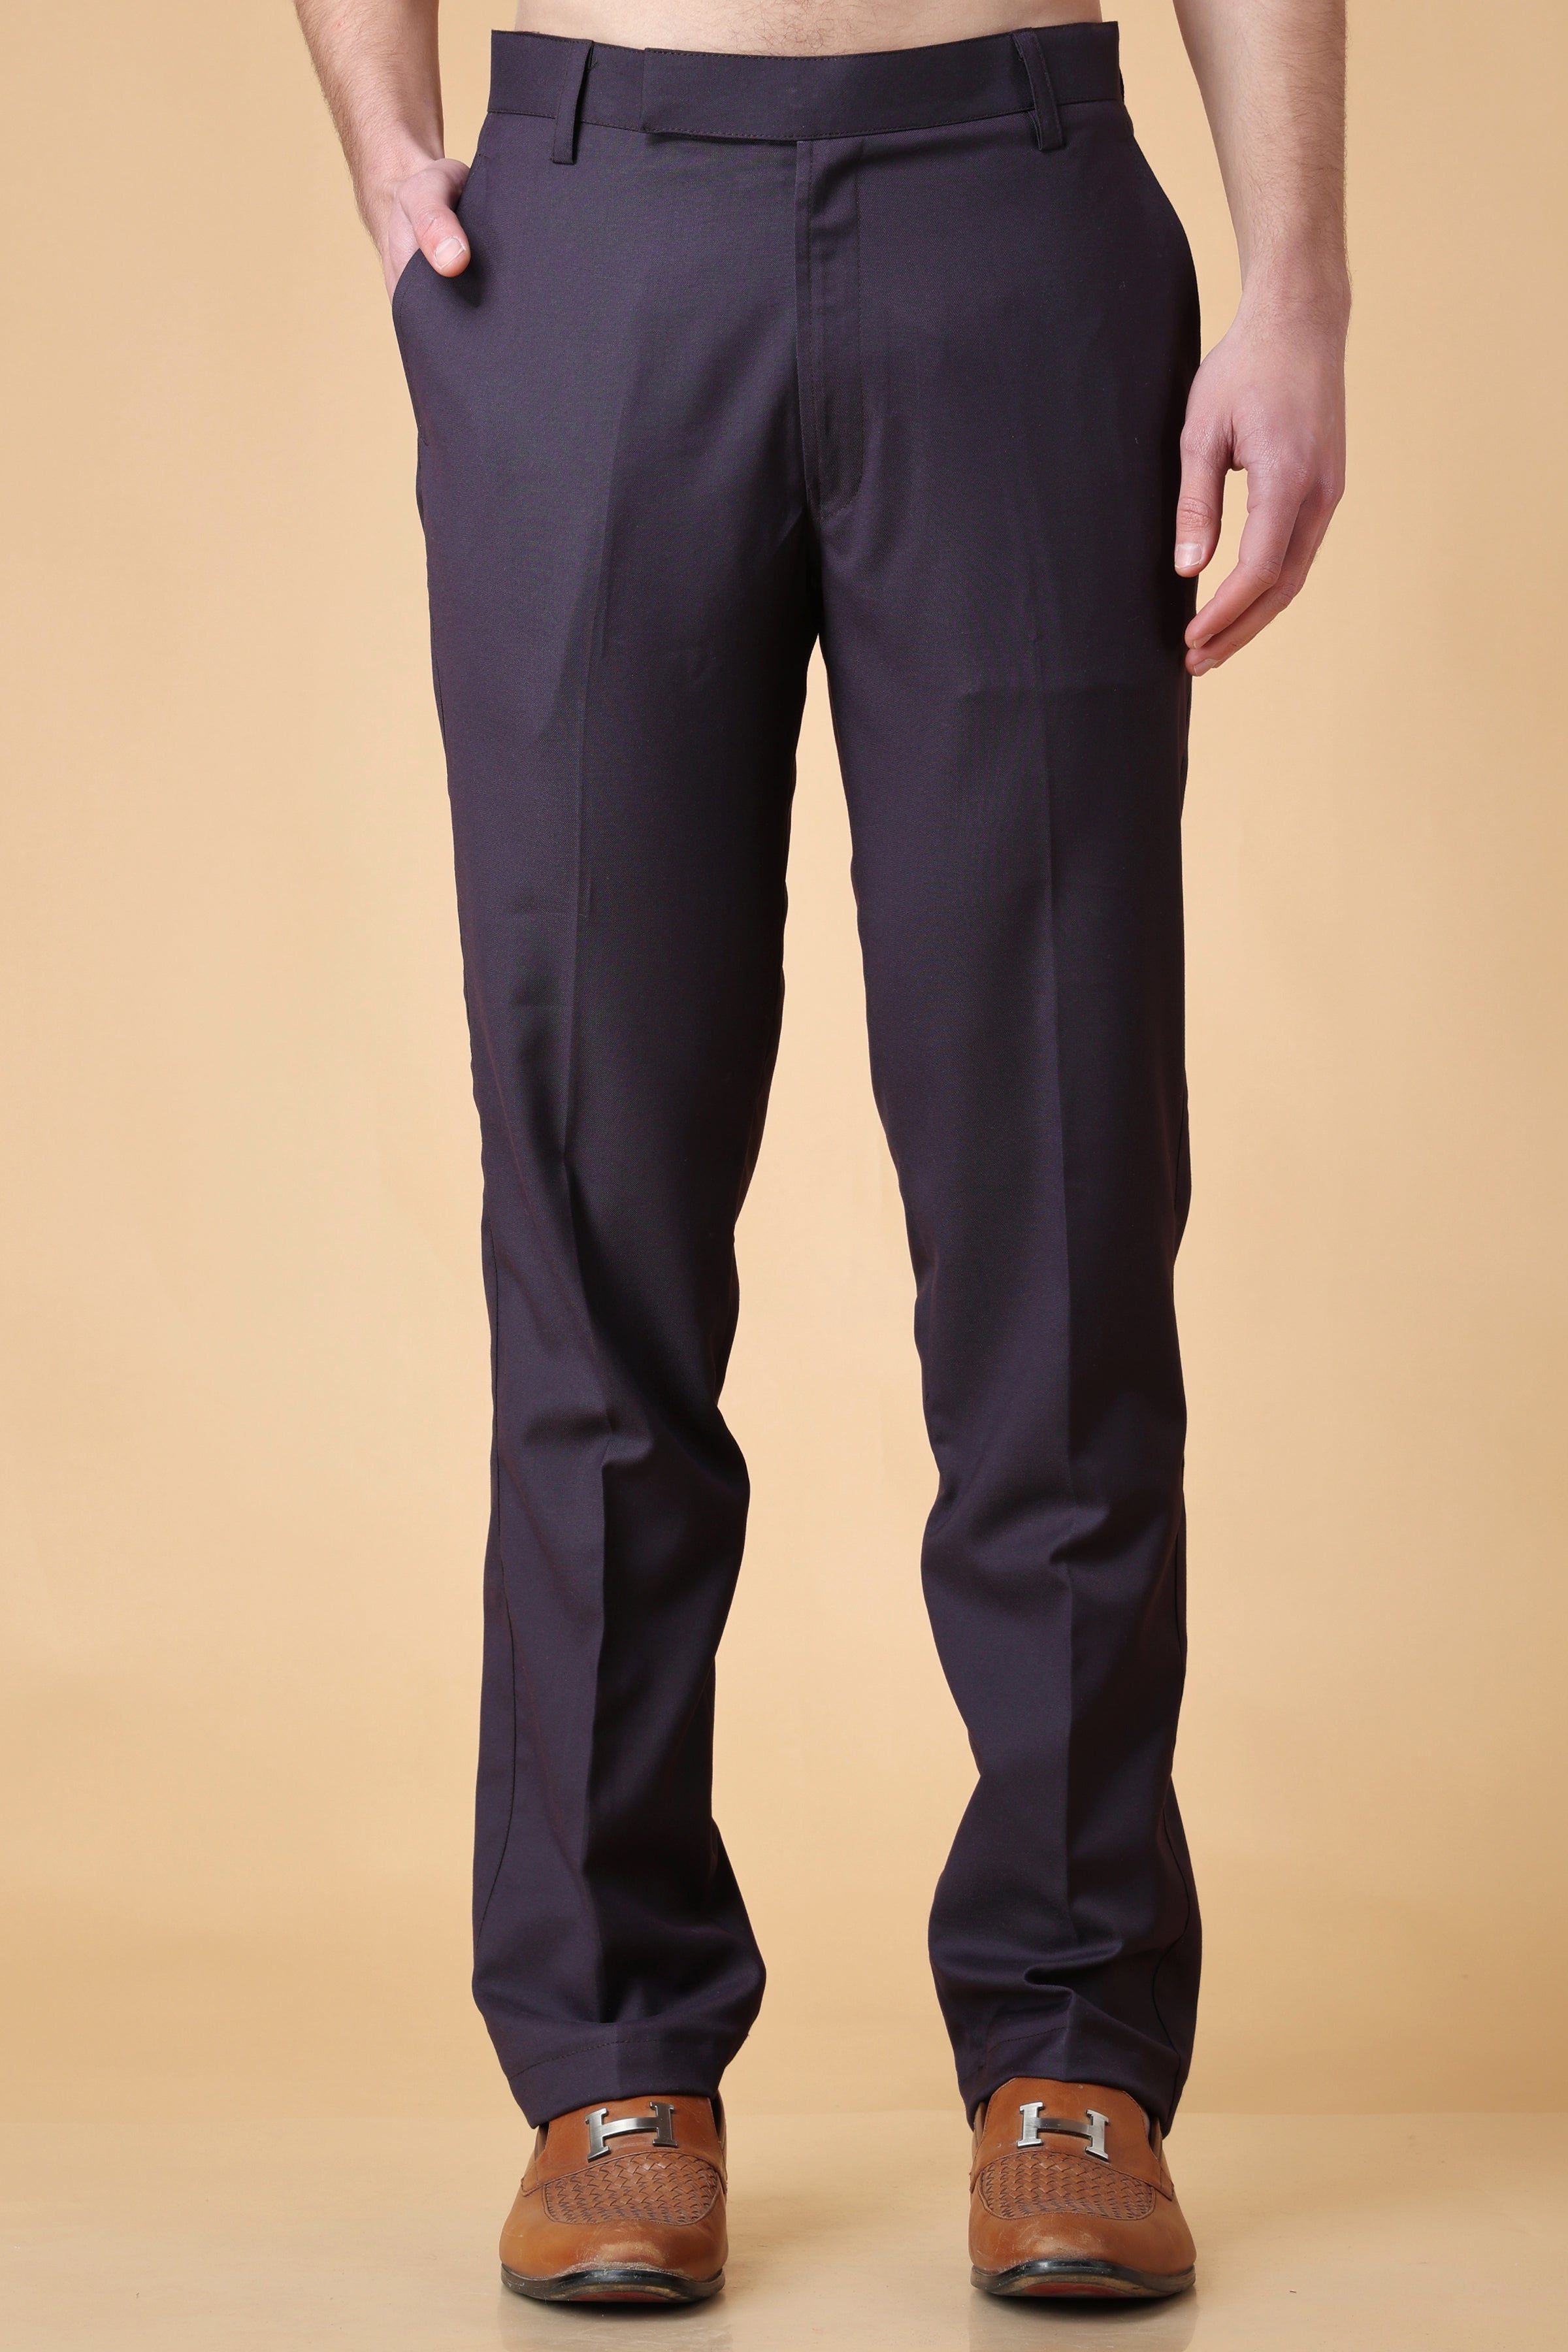 Buy Formal Plus Size Pants For Men  Plus Size Formal Pants  Apella